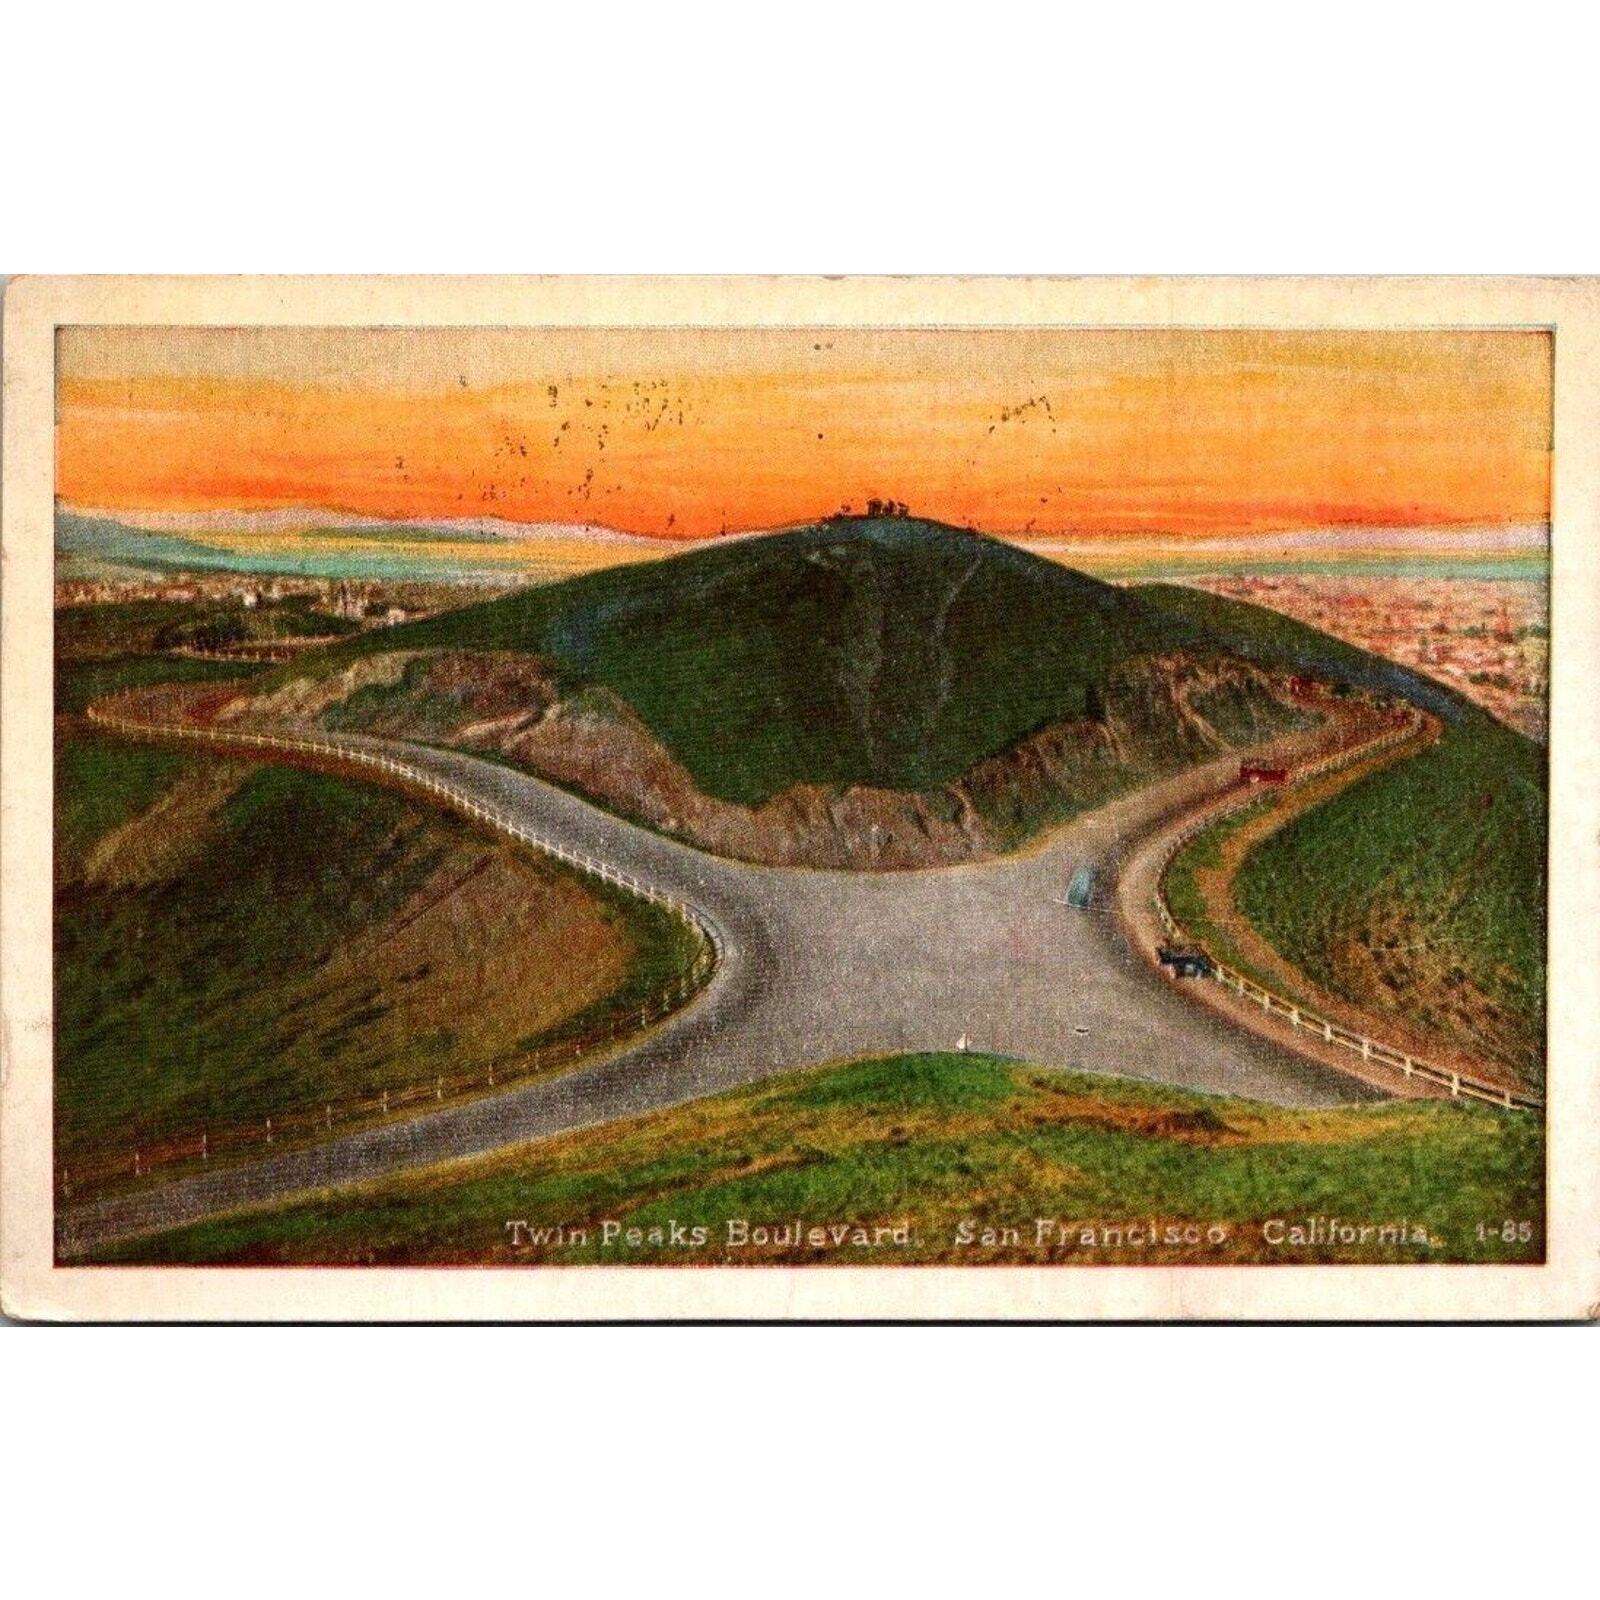 Vintage Postcard Twin Peaks Boulevard San Francisco California 5.5 x 3.5